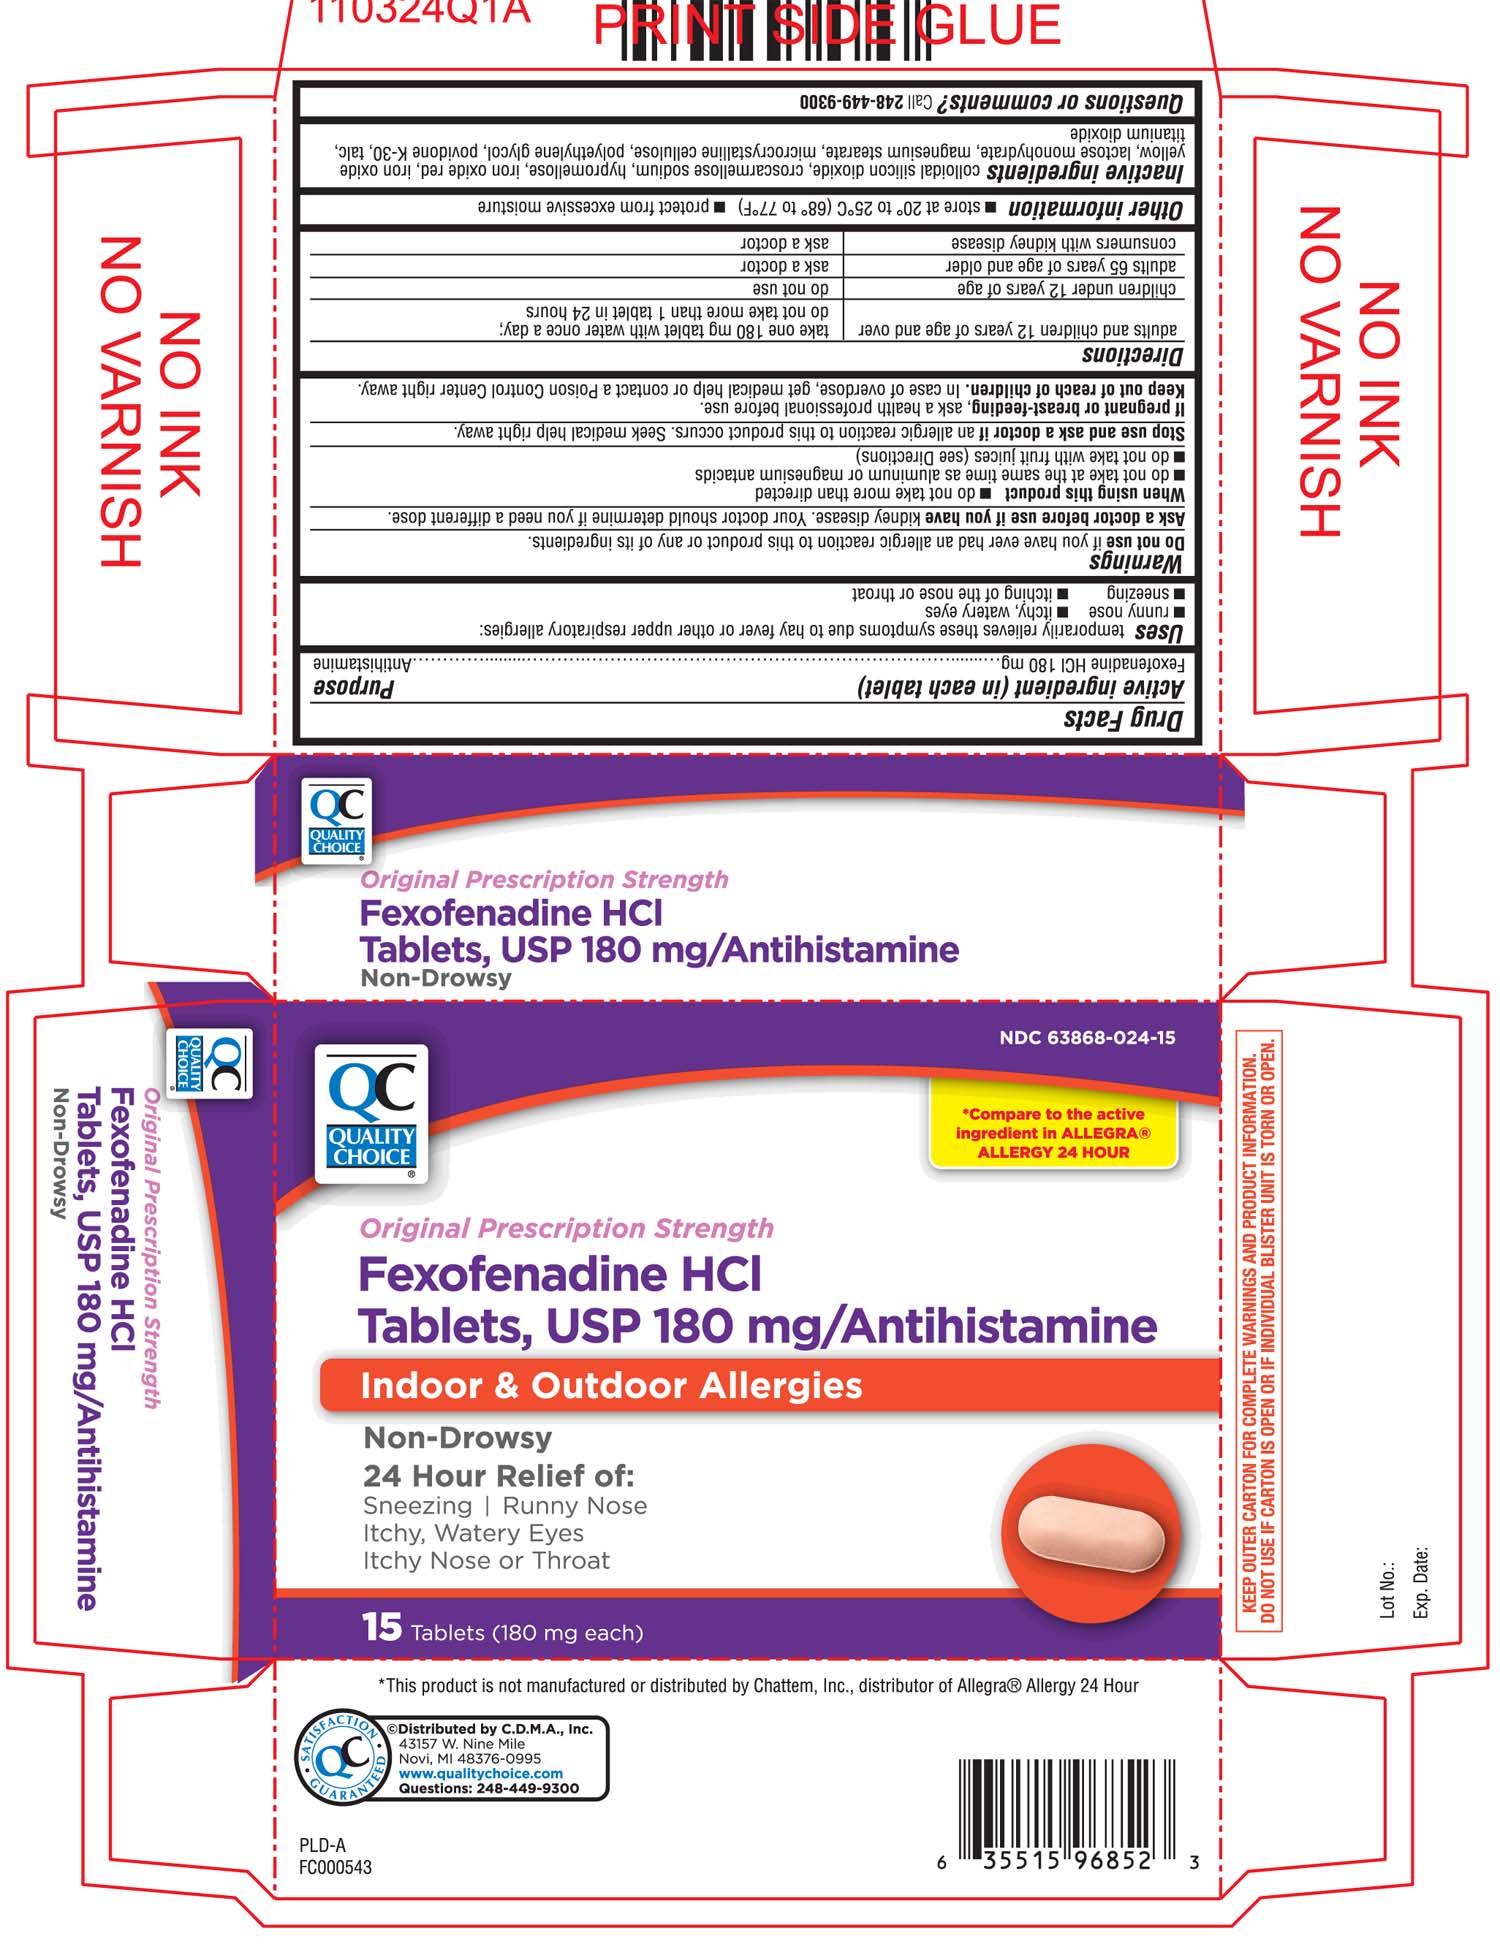 QC Fexofenadine HCl 180 mg 15 count